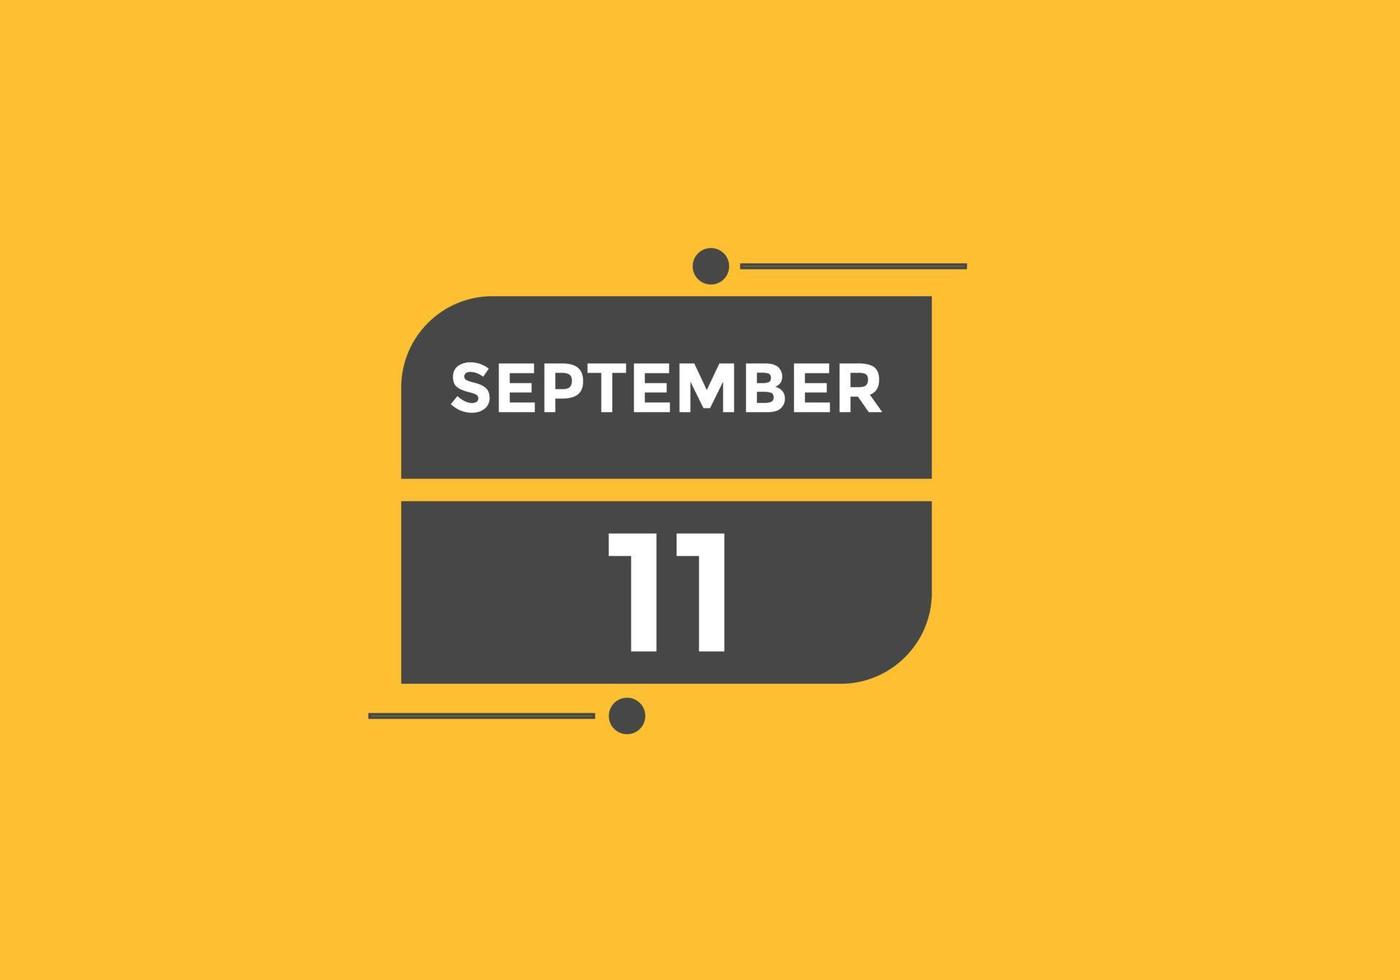 september 11 calendar reminder. 11th september daily calendar icon template. Calendar 11th september icon Design template. Vector illustration